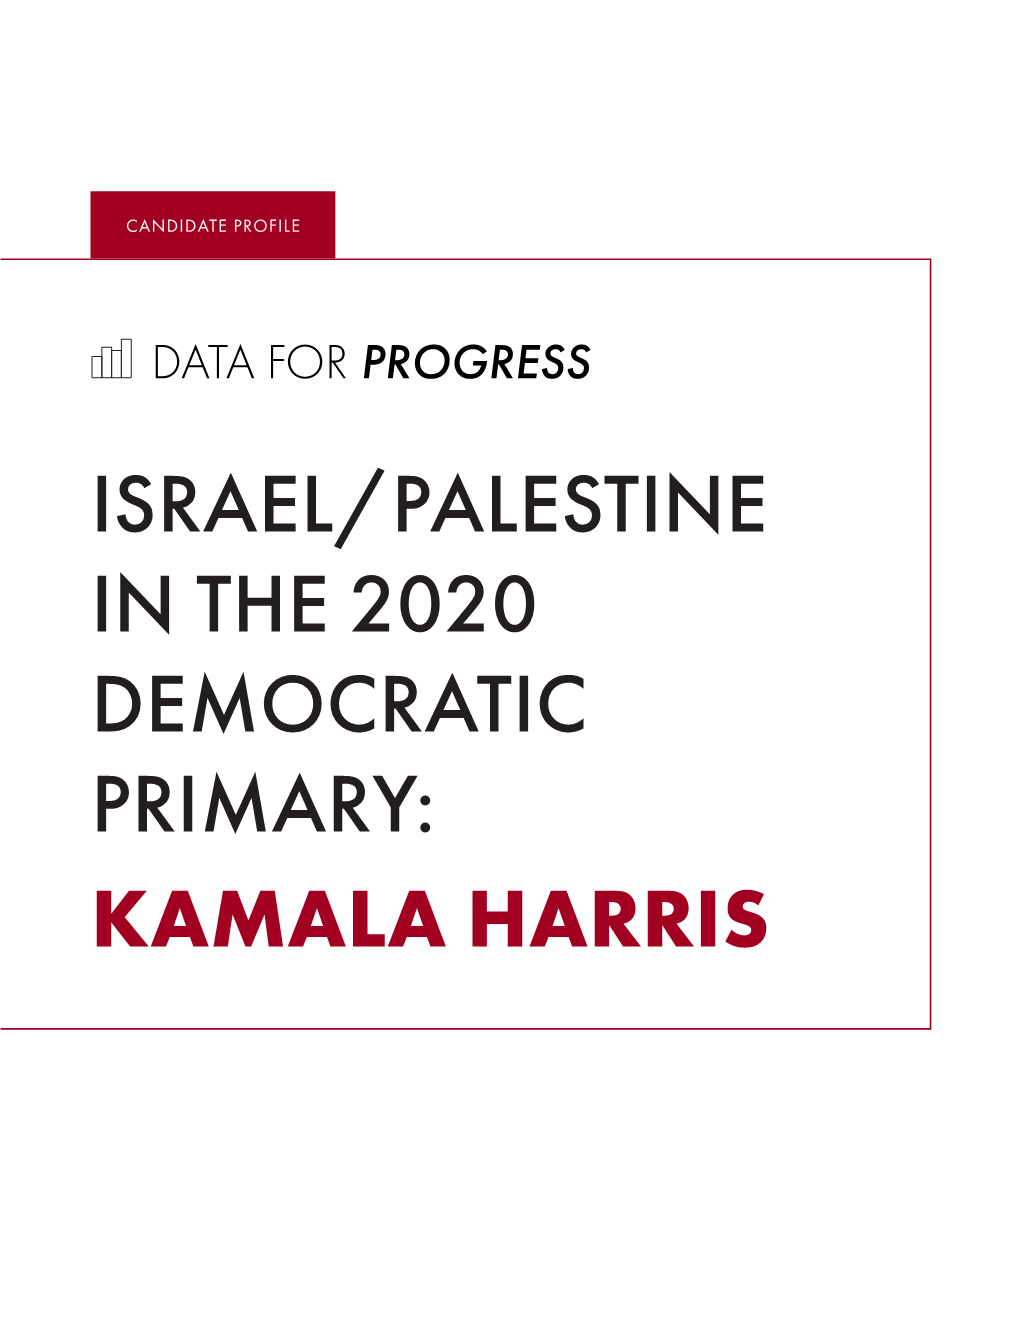 Israel/Palestine in the 2020 Democratic Primary: Kamala Harris Overview